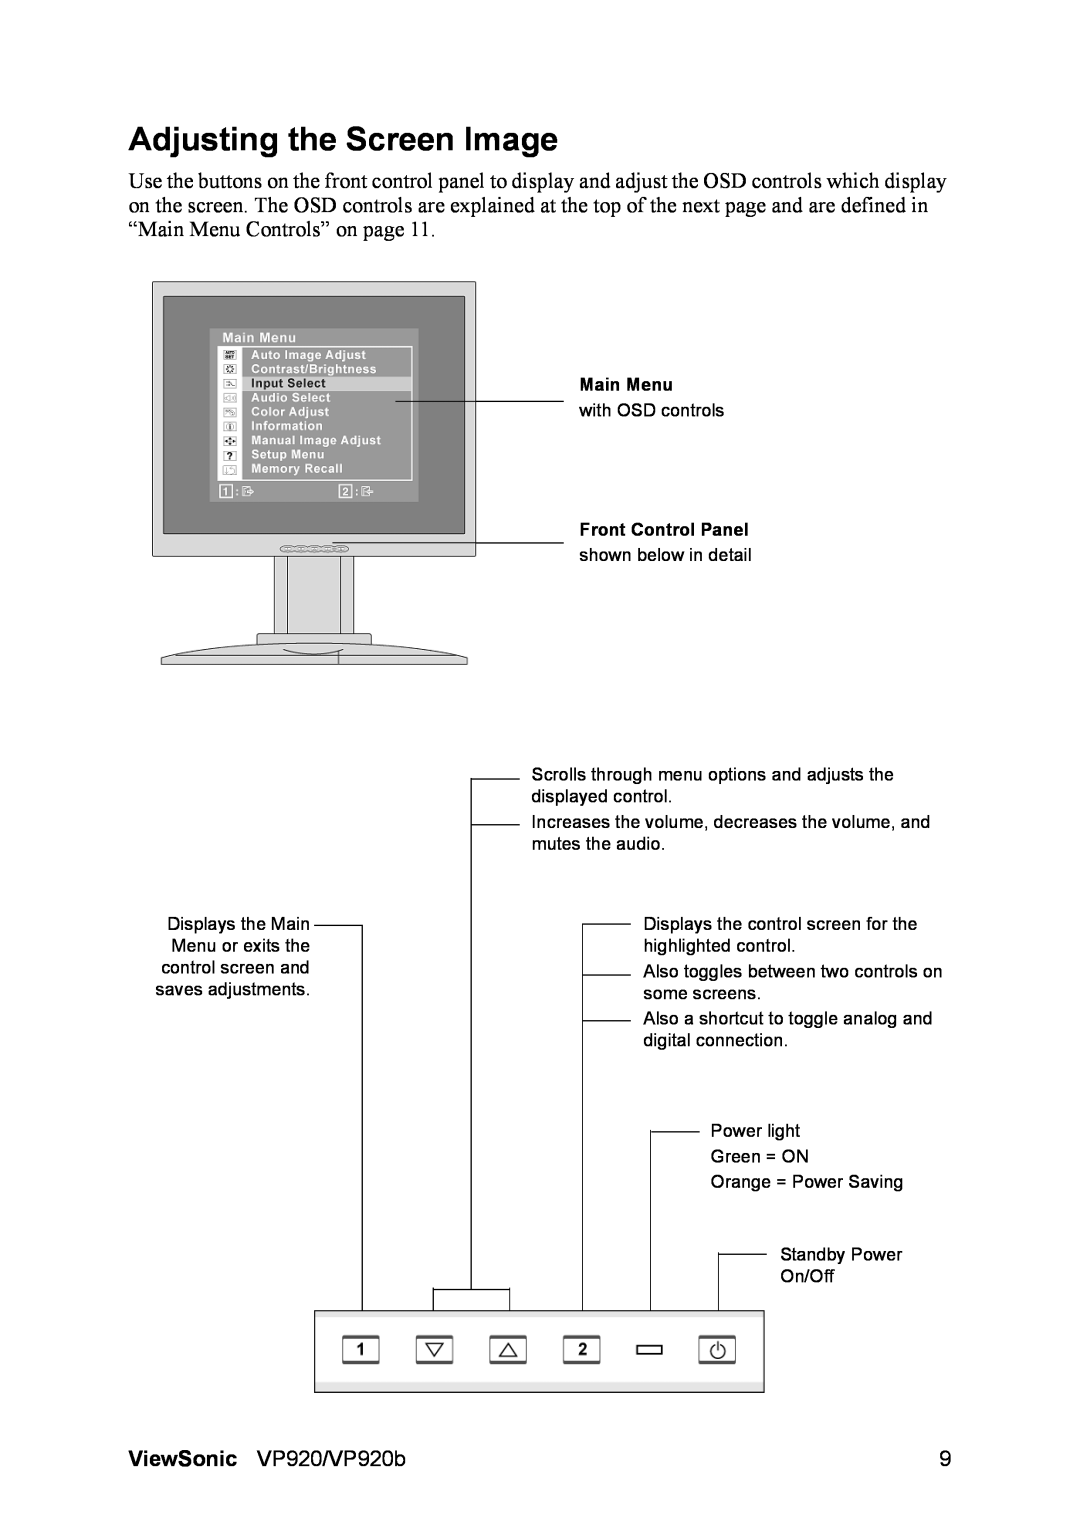 ViewSonic VP920B manual Adjusting the Screen Image, Main Menu, Front Control Panel 